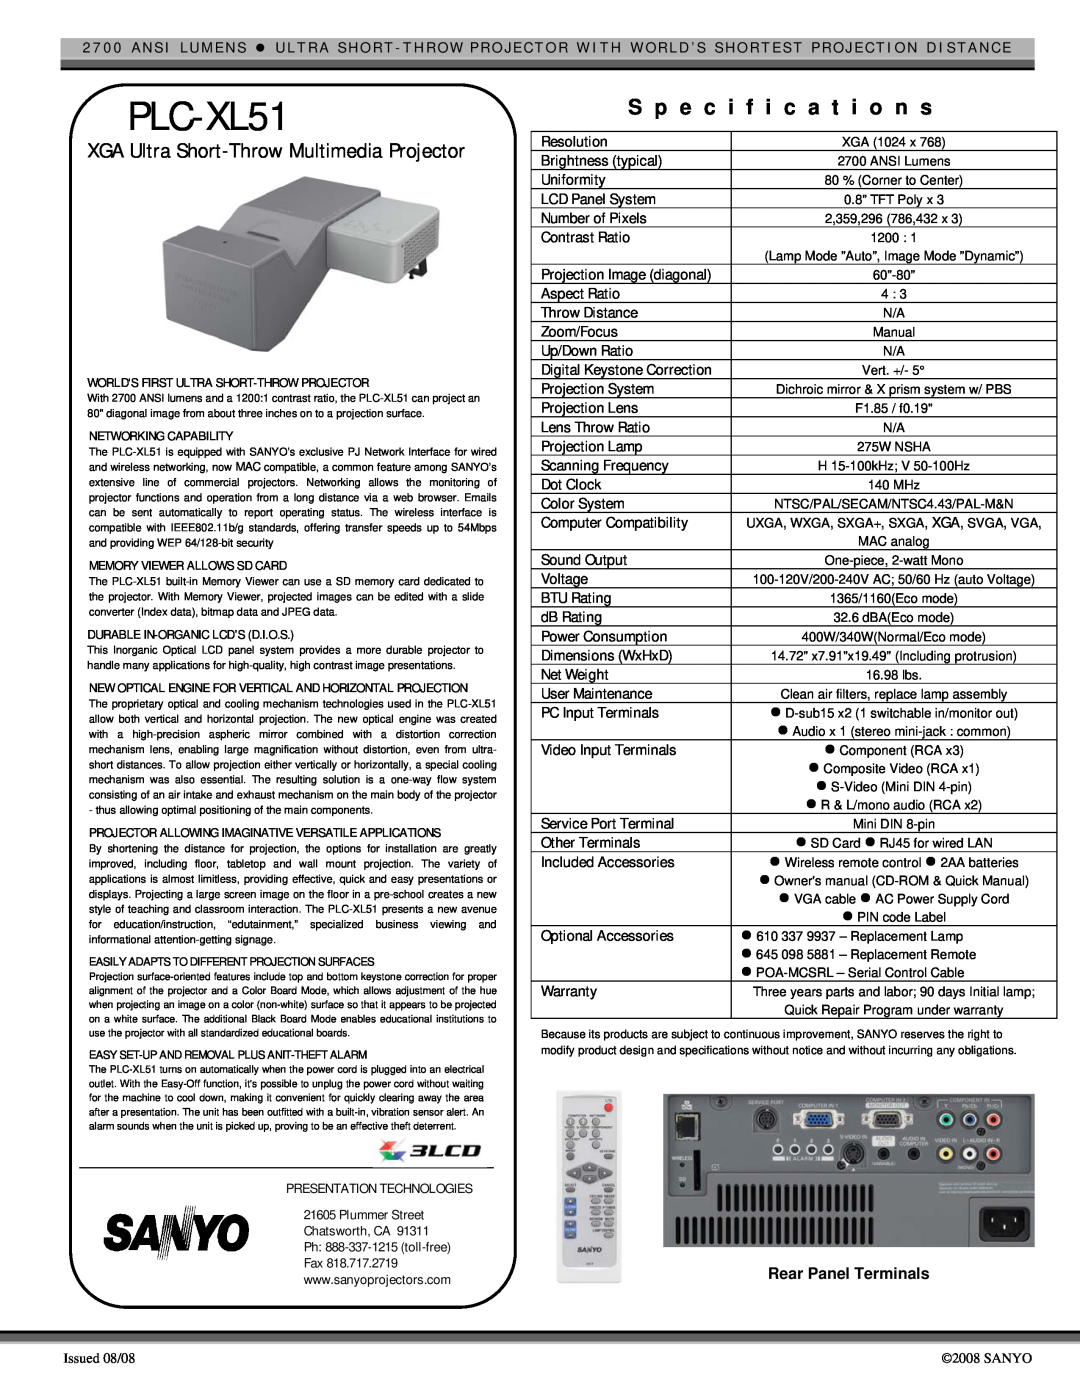 Sanyo PLC-XL51 specifications S p e c i f i c a t i o n s, XGA Ultra Short-ThrowMultimedia Projector 